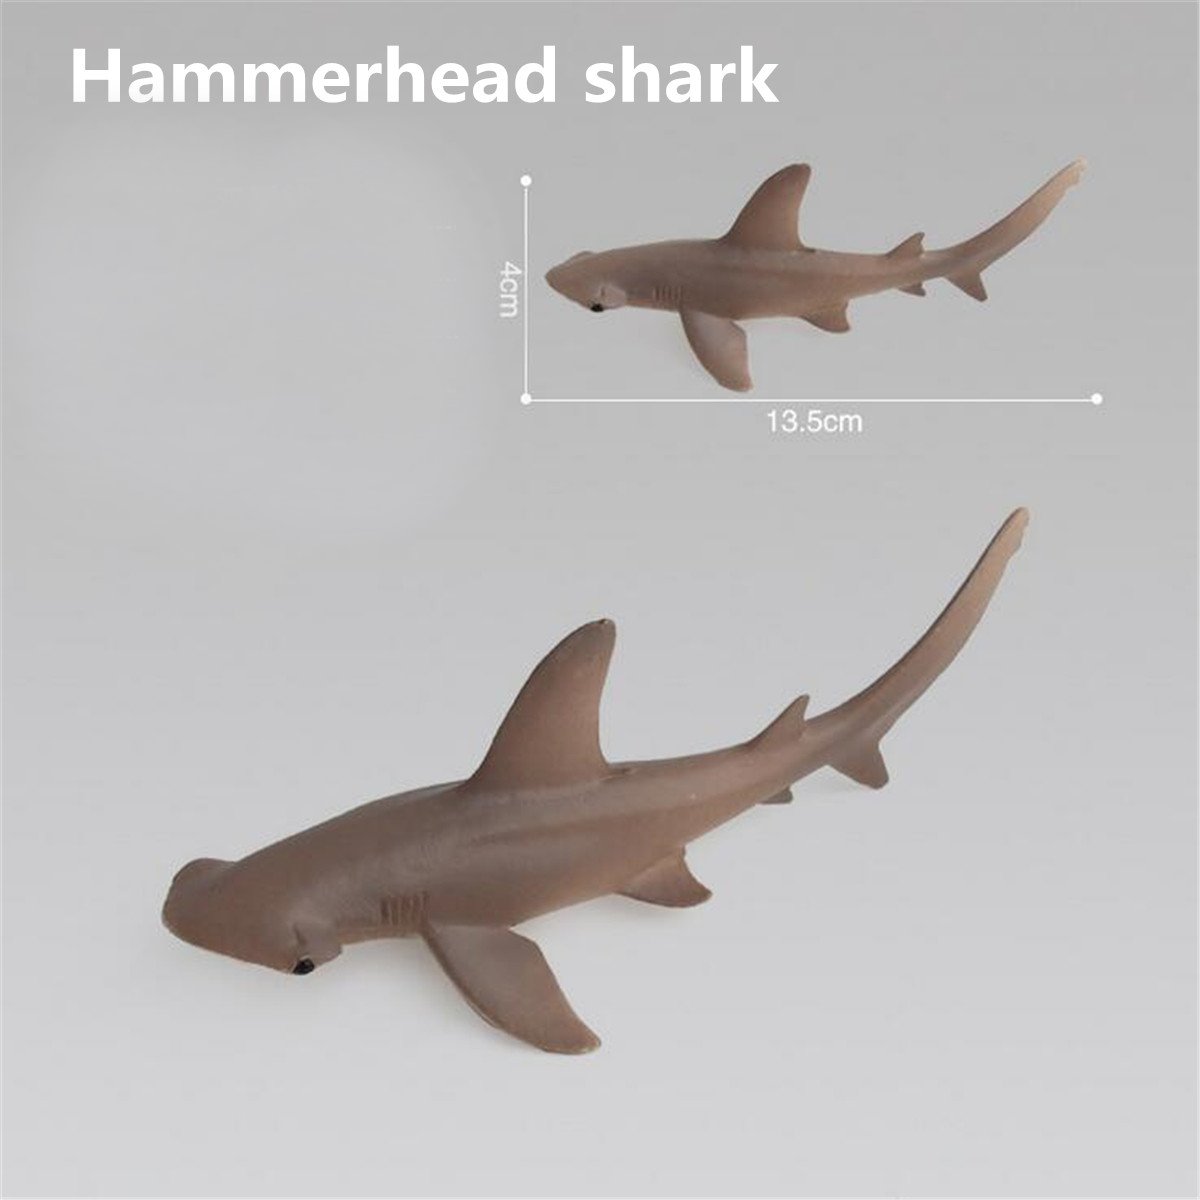 14PCS-Shark-Sea-Creature-Toy-Animal-Figures-Diecast-Model-1414645